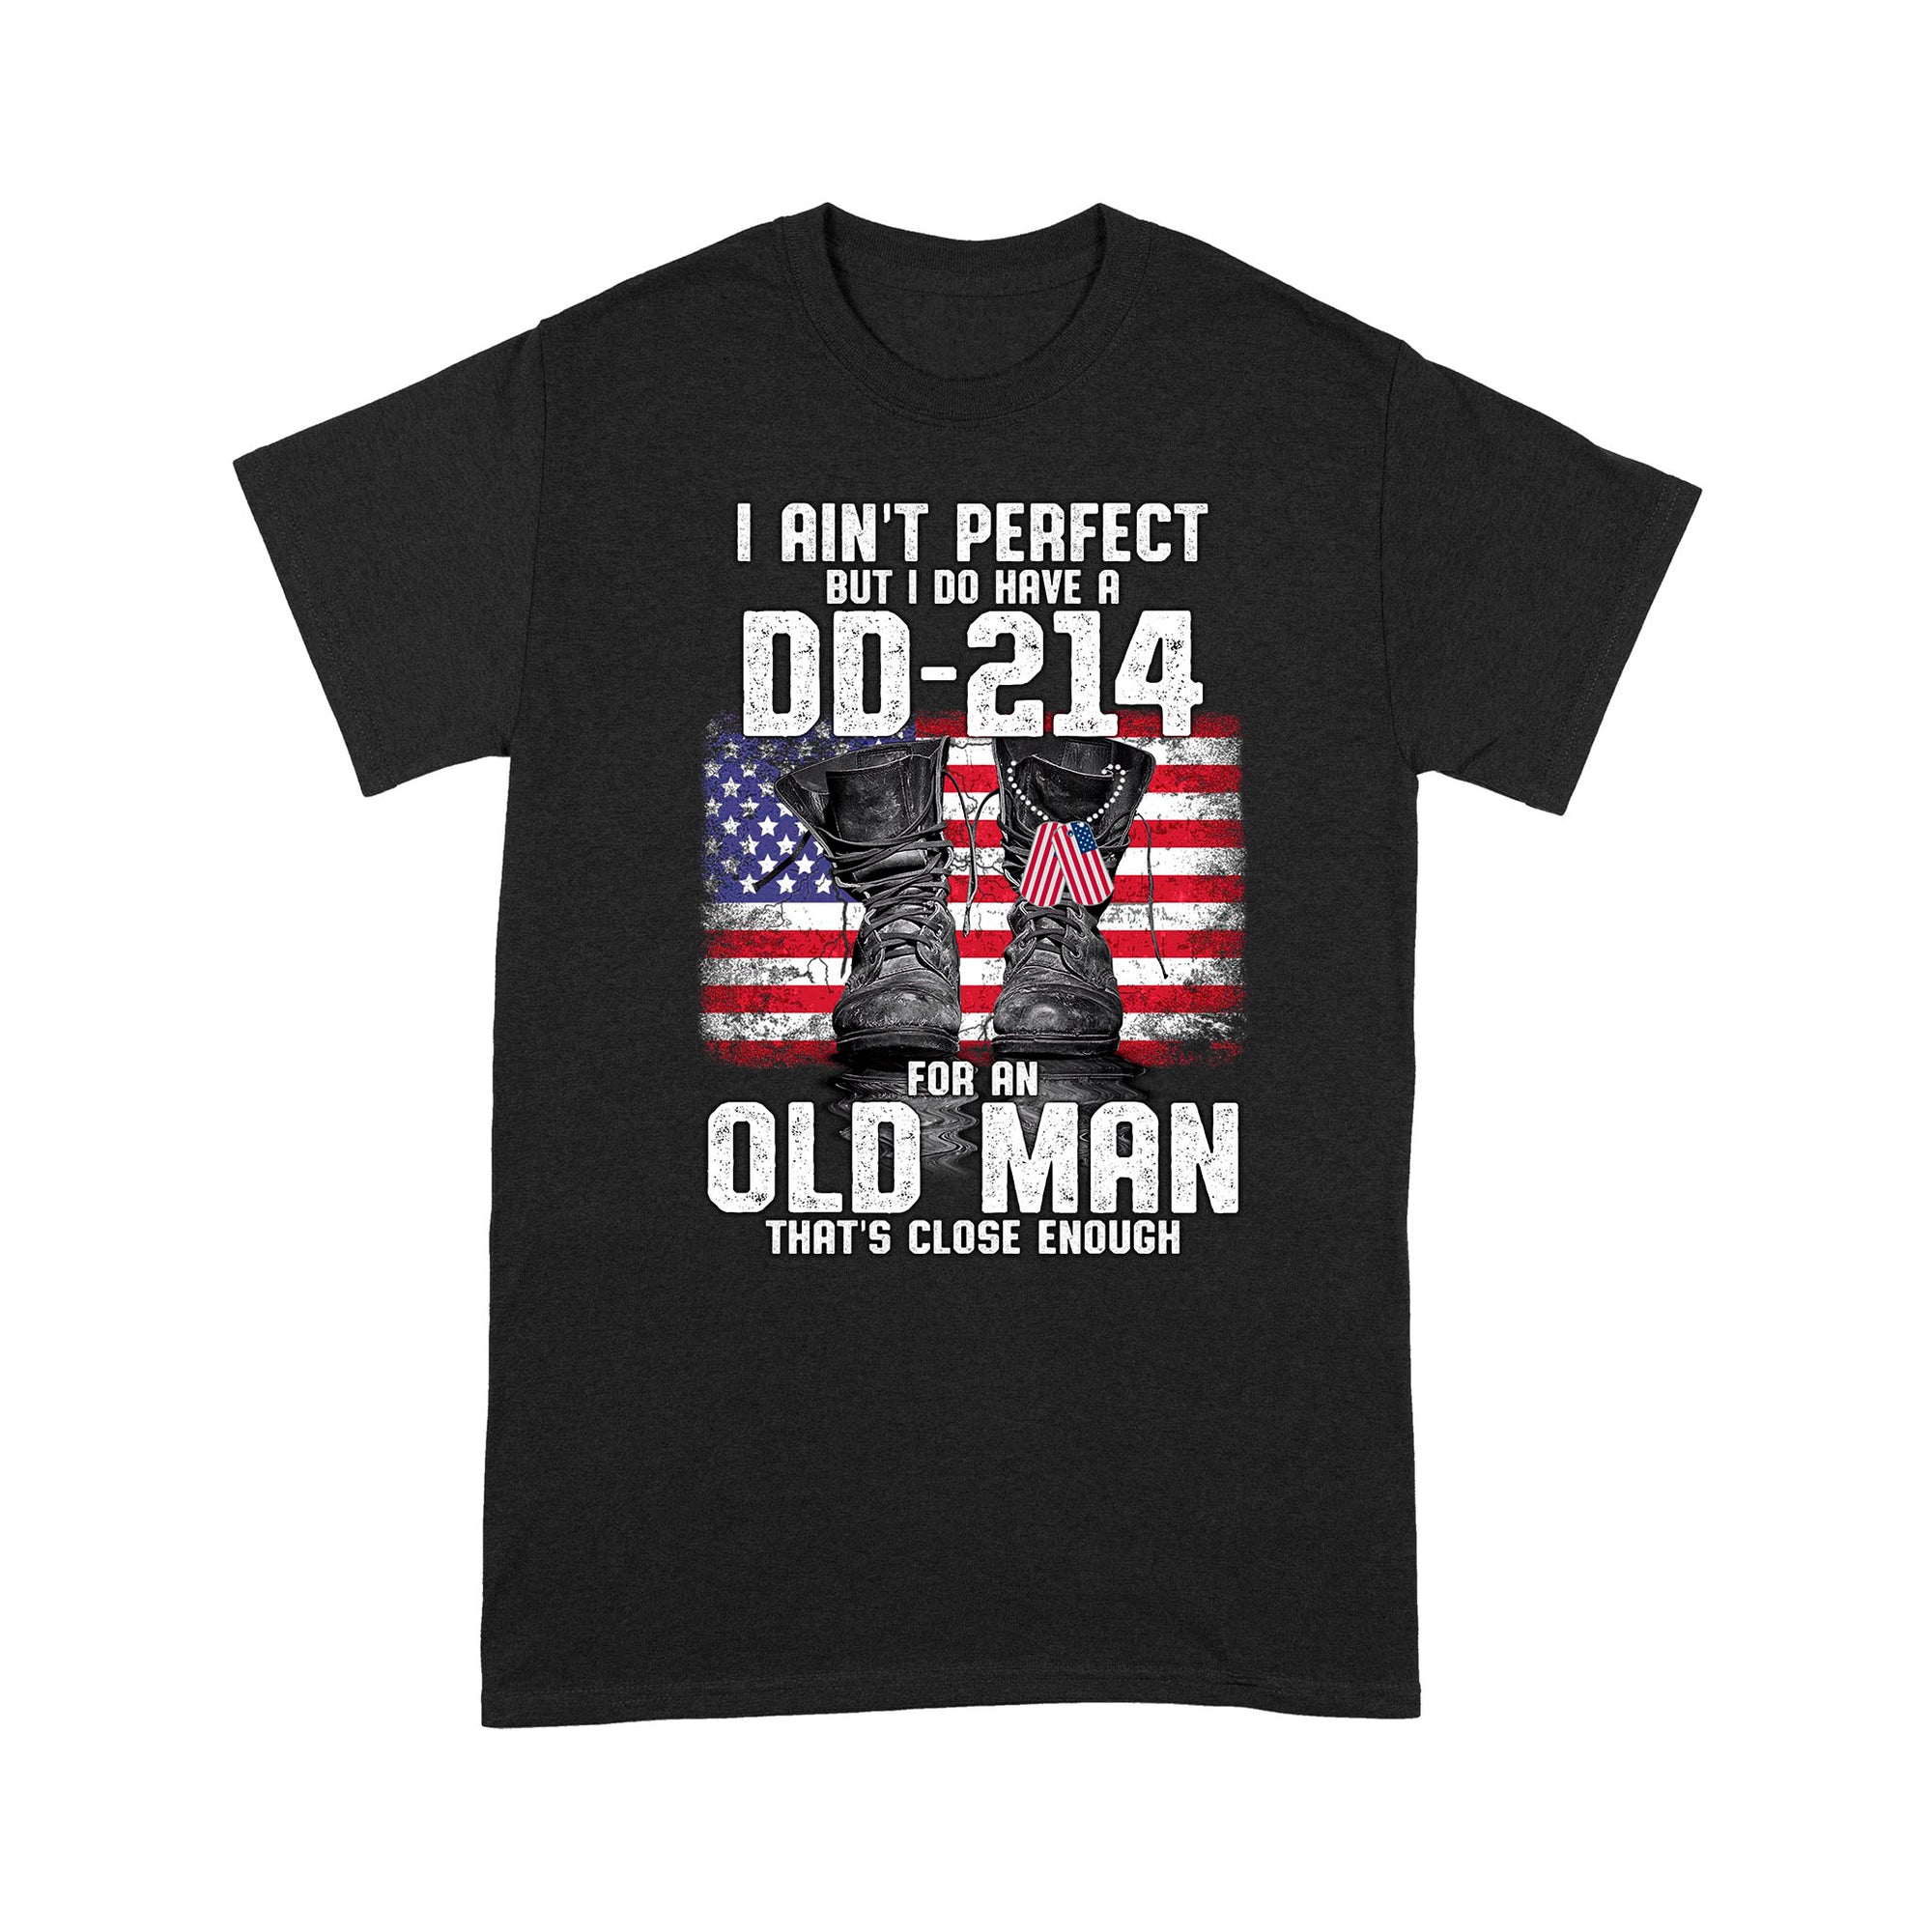 I Do Have A DD-214 Standard T-shirt TA